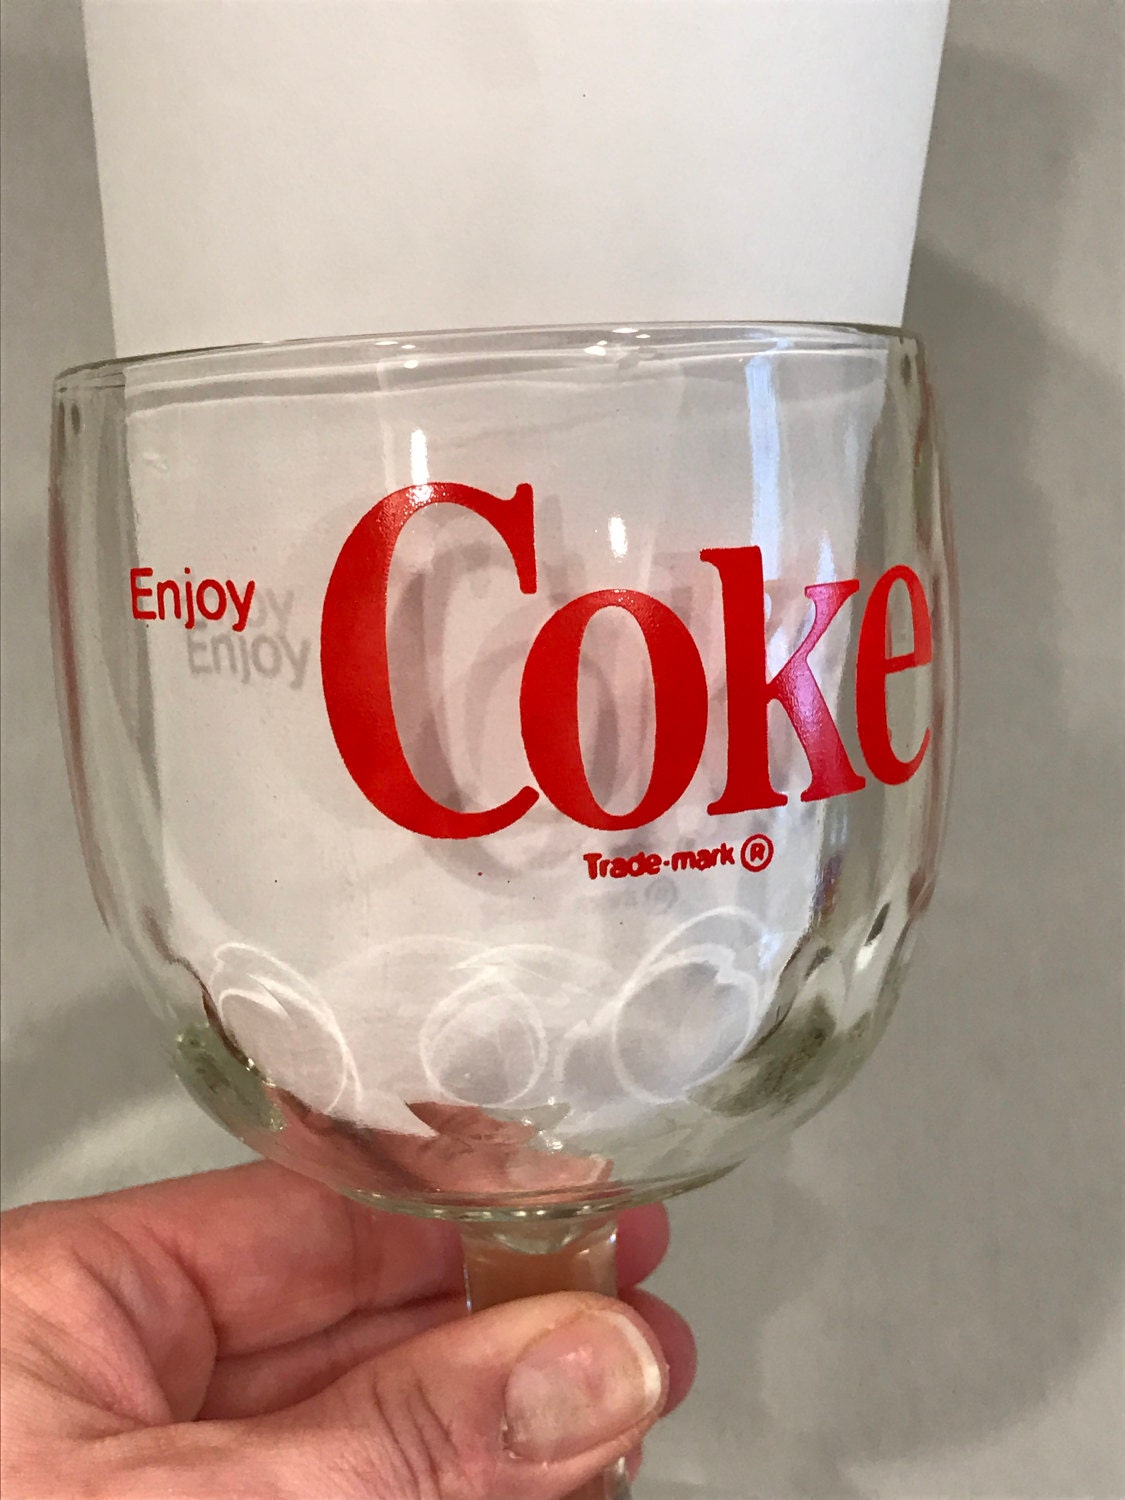 Coca-Cola Classic Drinking Glass Coke Enjoy Coke Enjoy Coca Cola